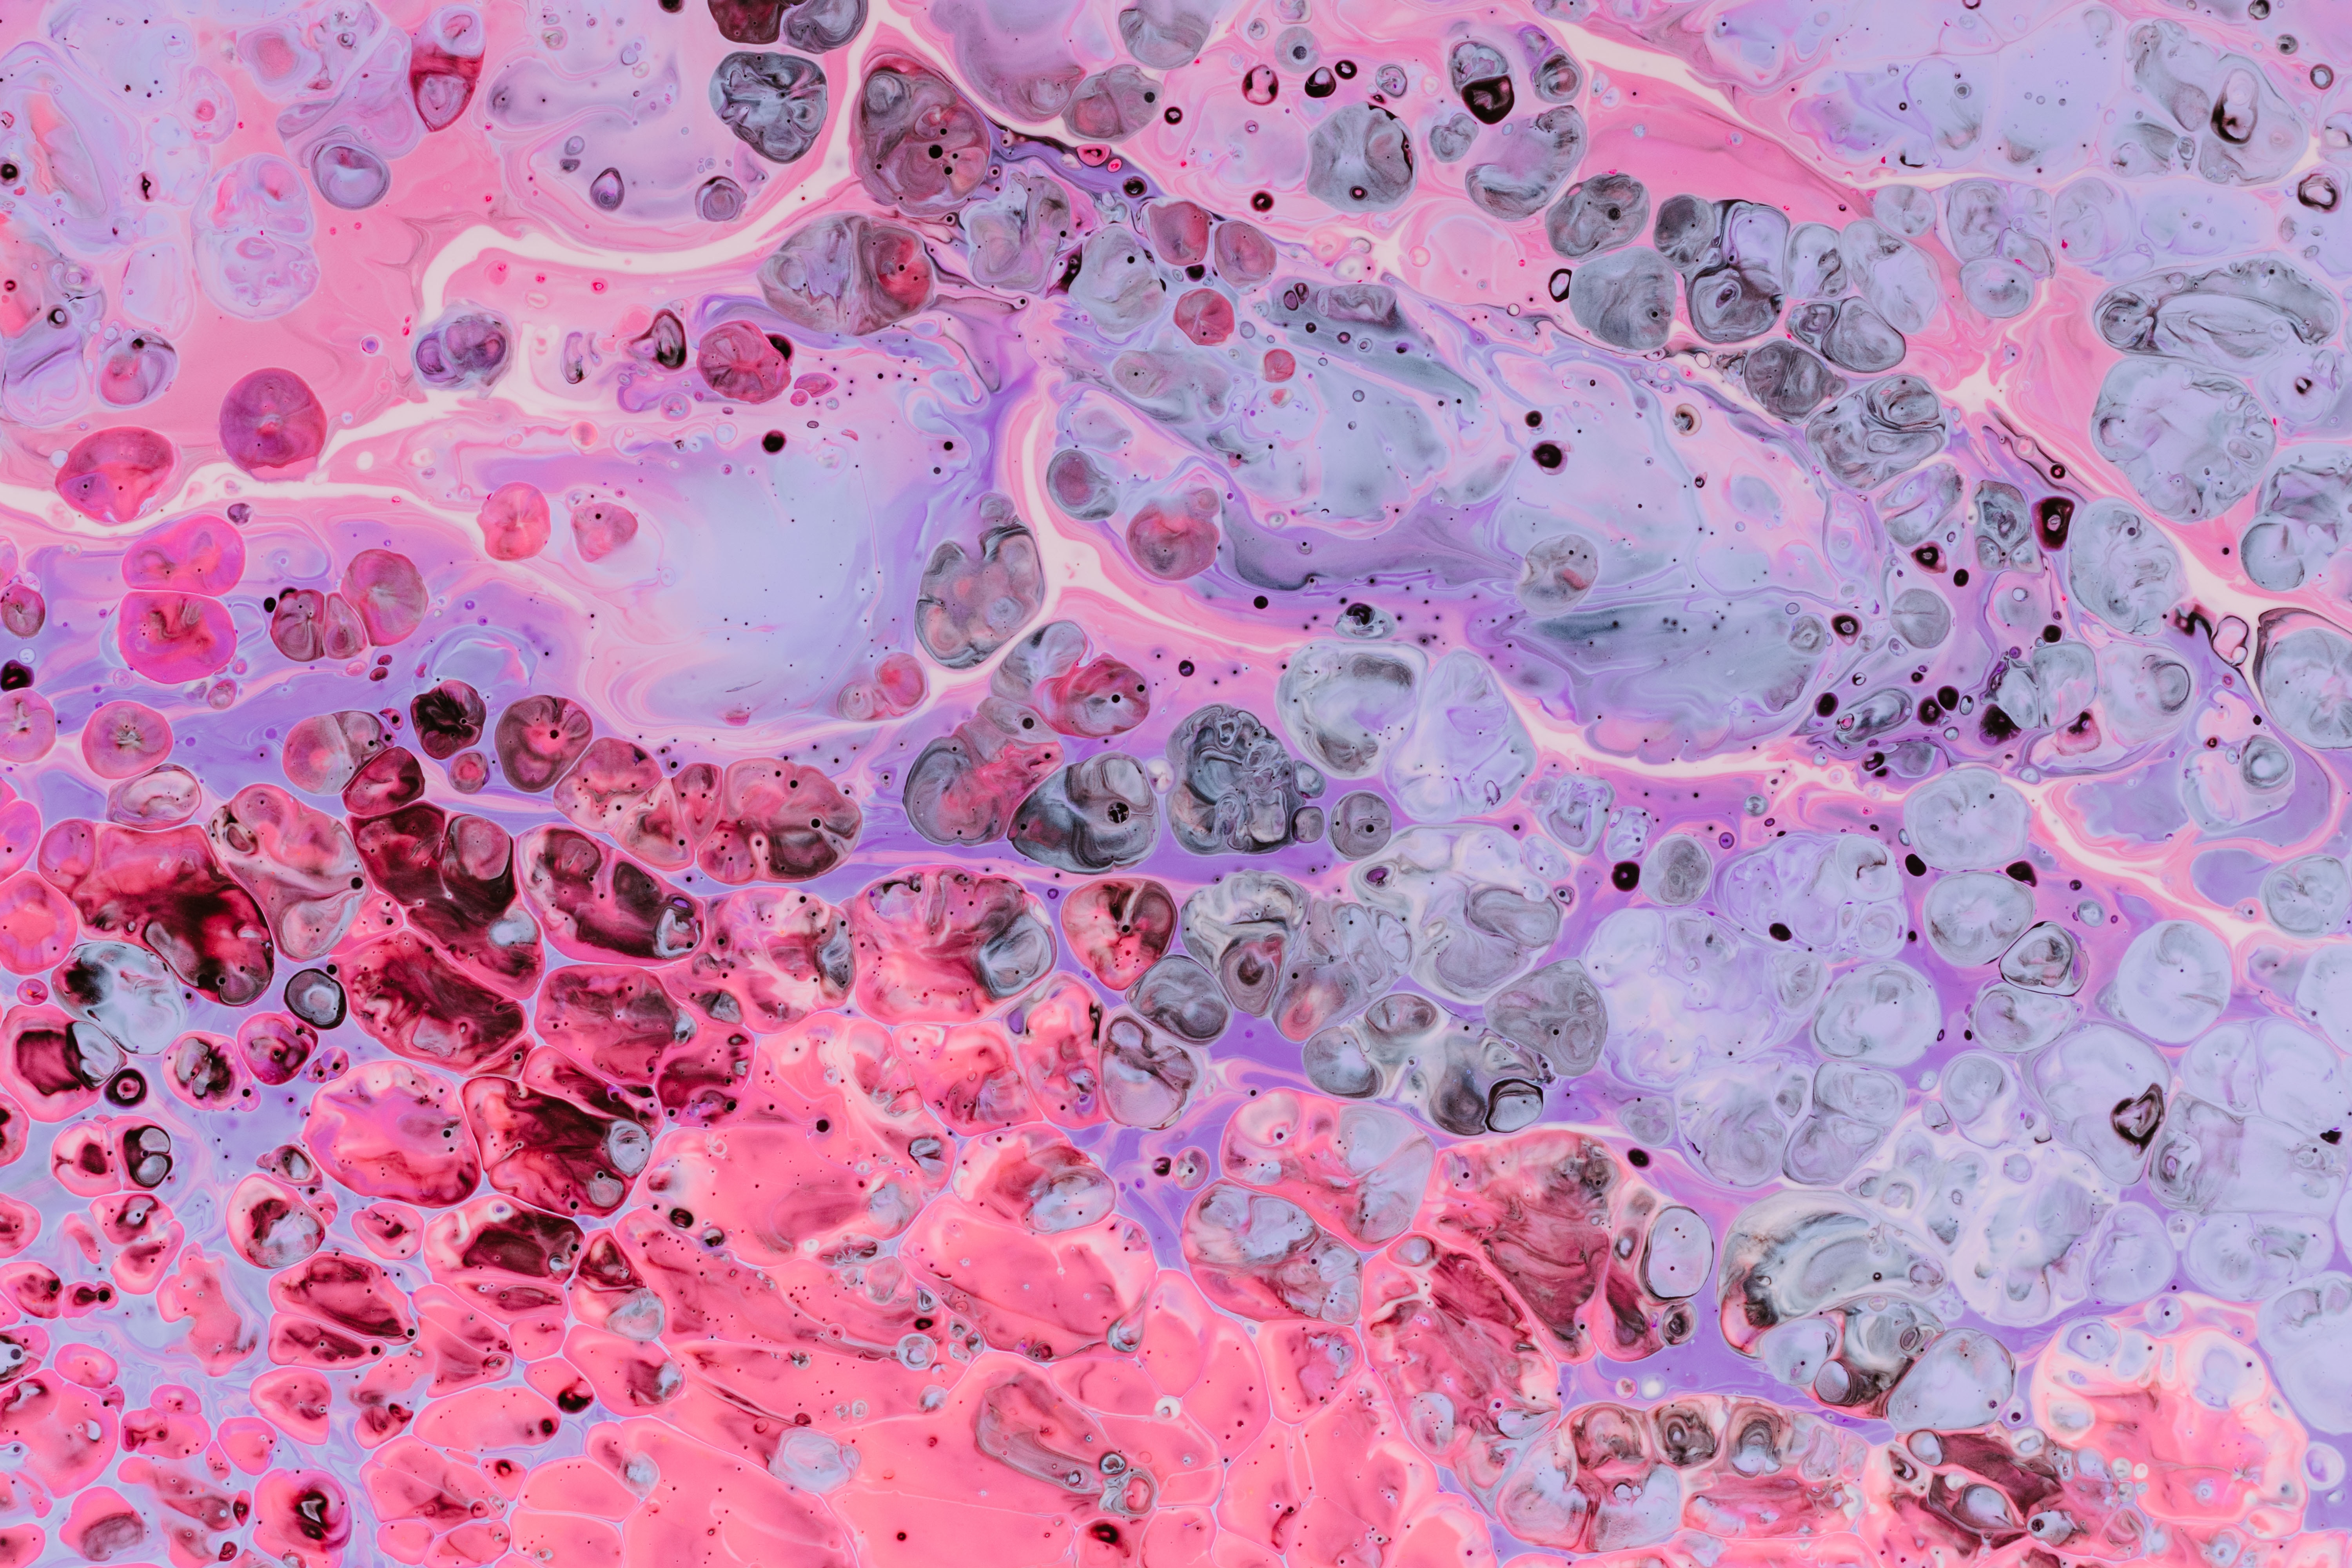 General 6000x4000 pink paint splatter paint splash abstract white purple digital art